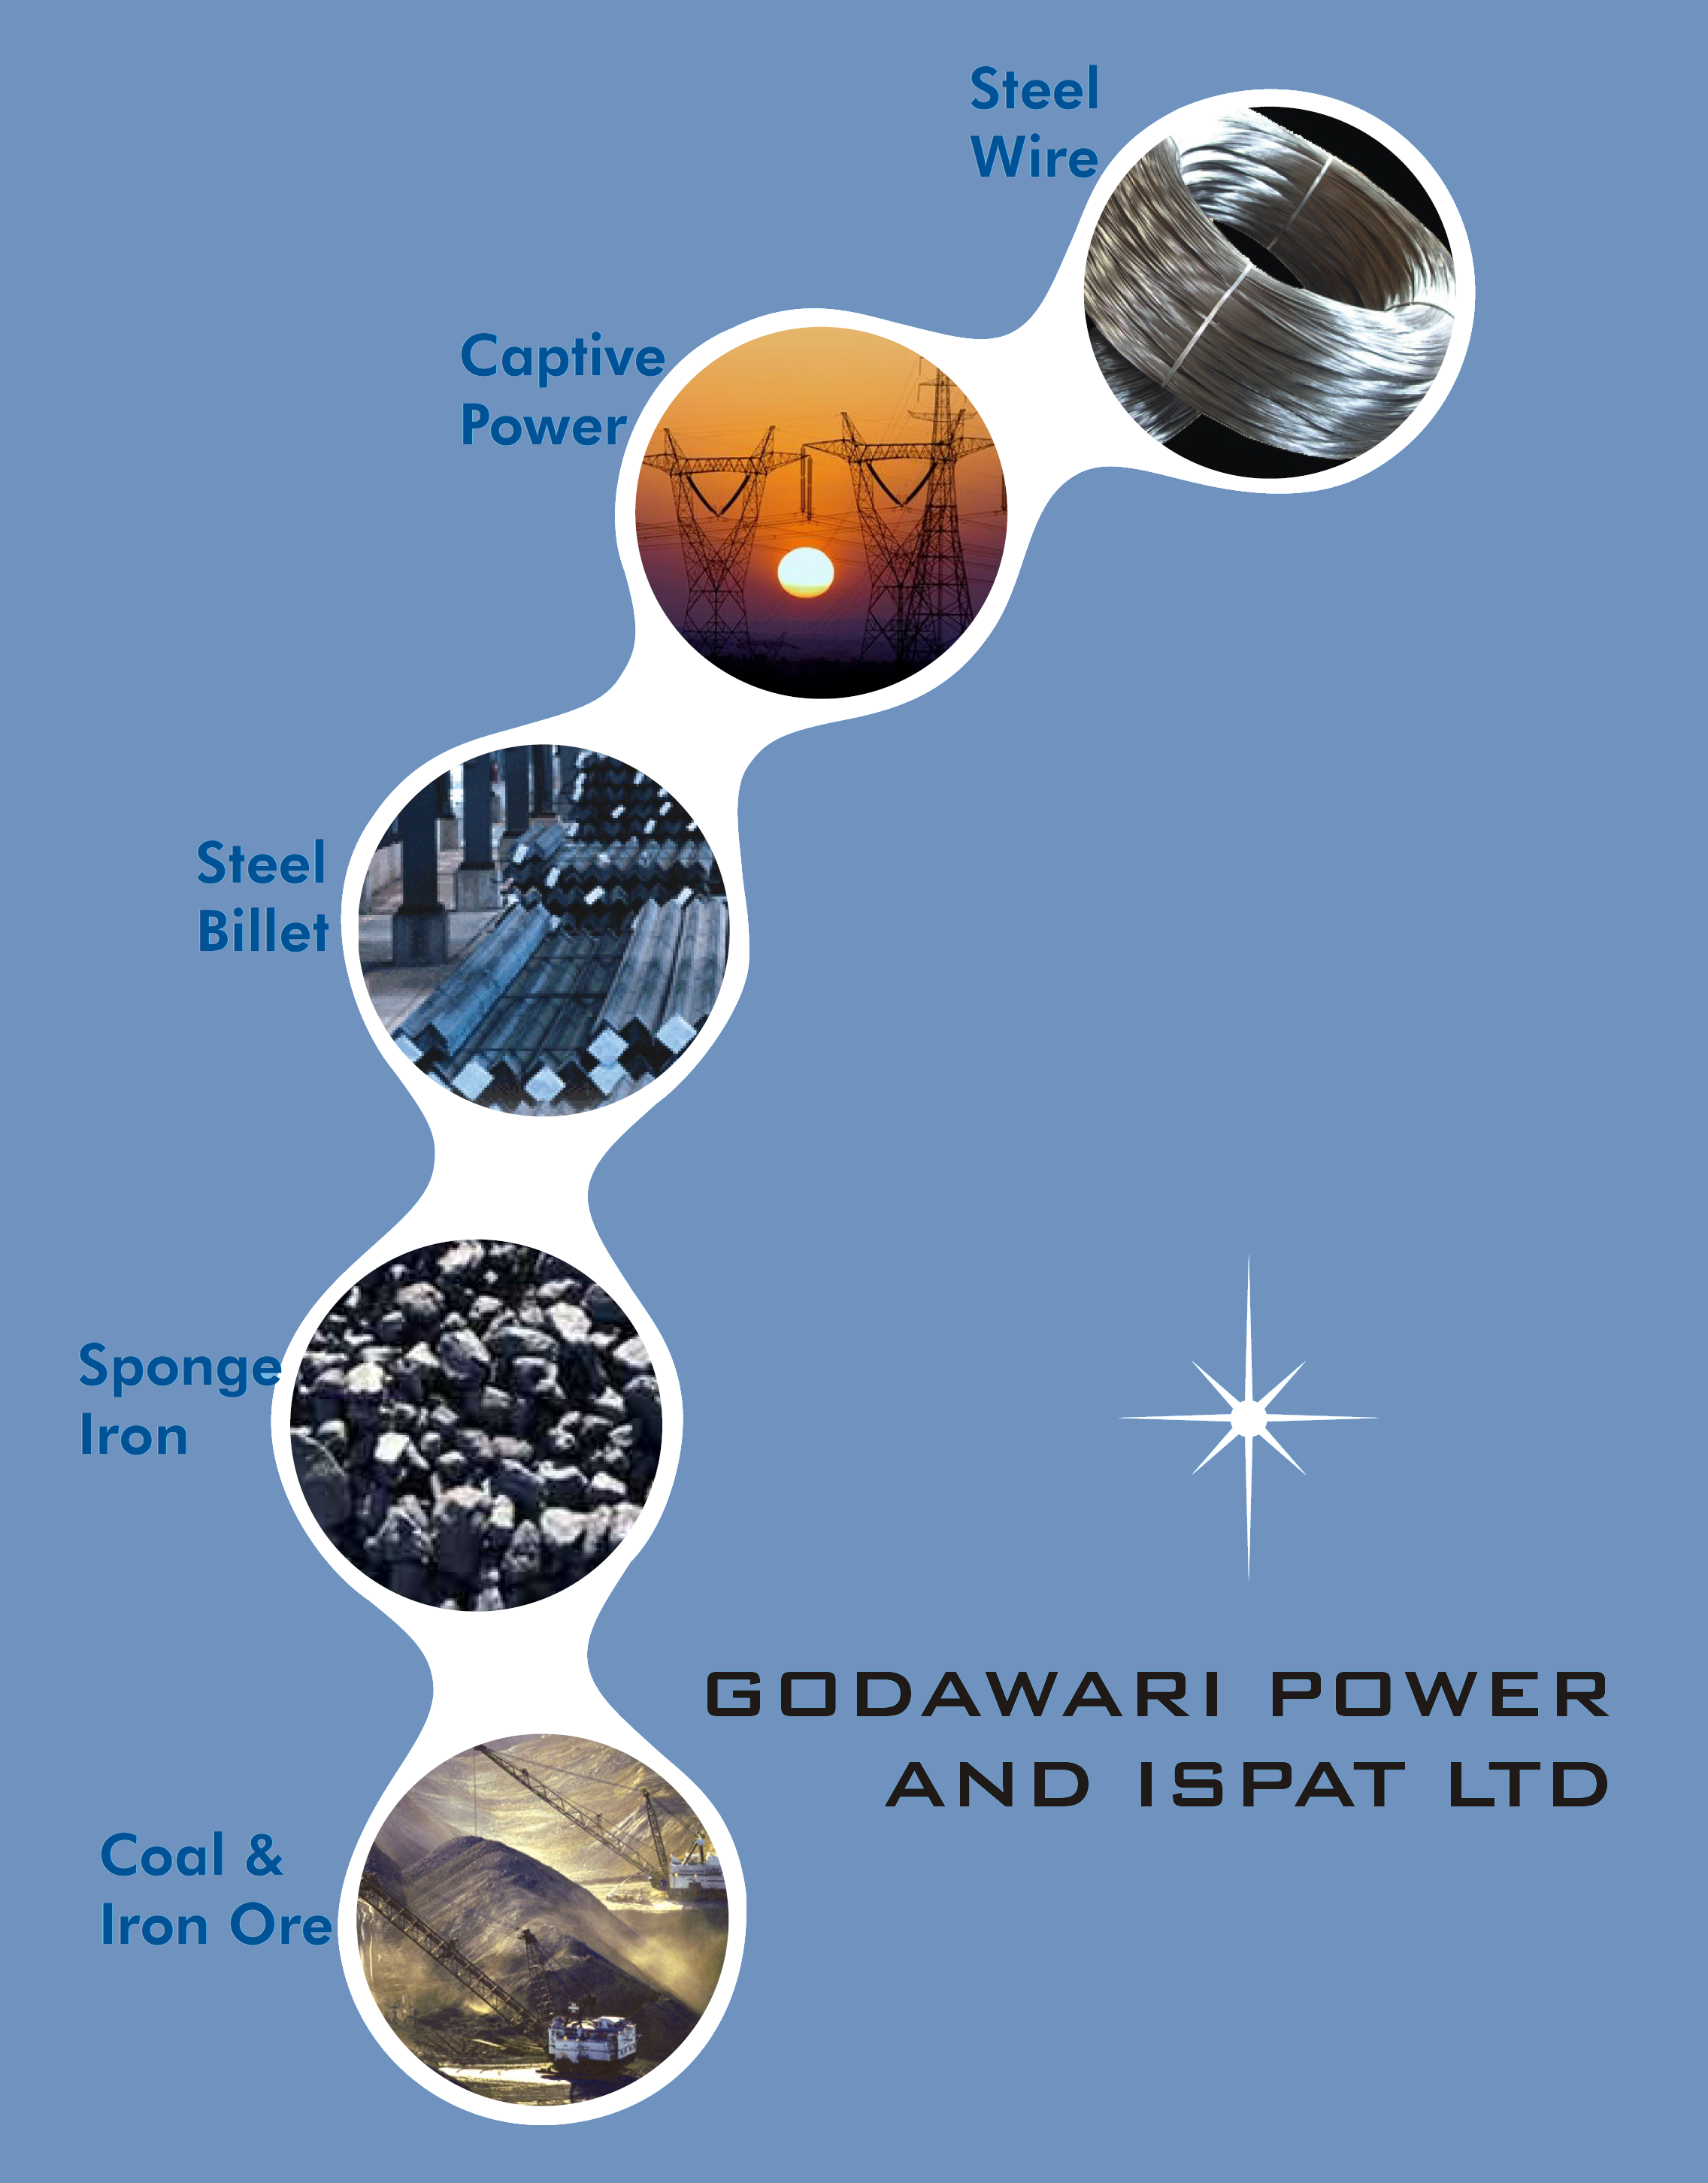 Godawari-Power-Ispat-Jagdamba-Power-Alloys-Acquisition-Power-Business-Inside-Cover